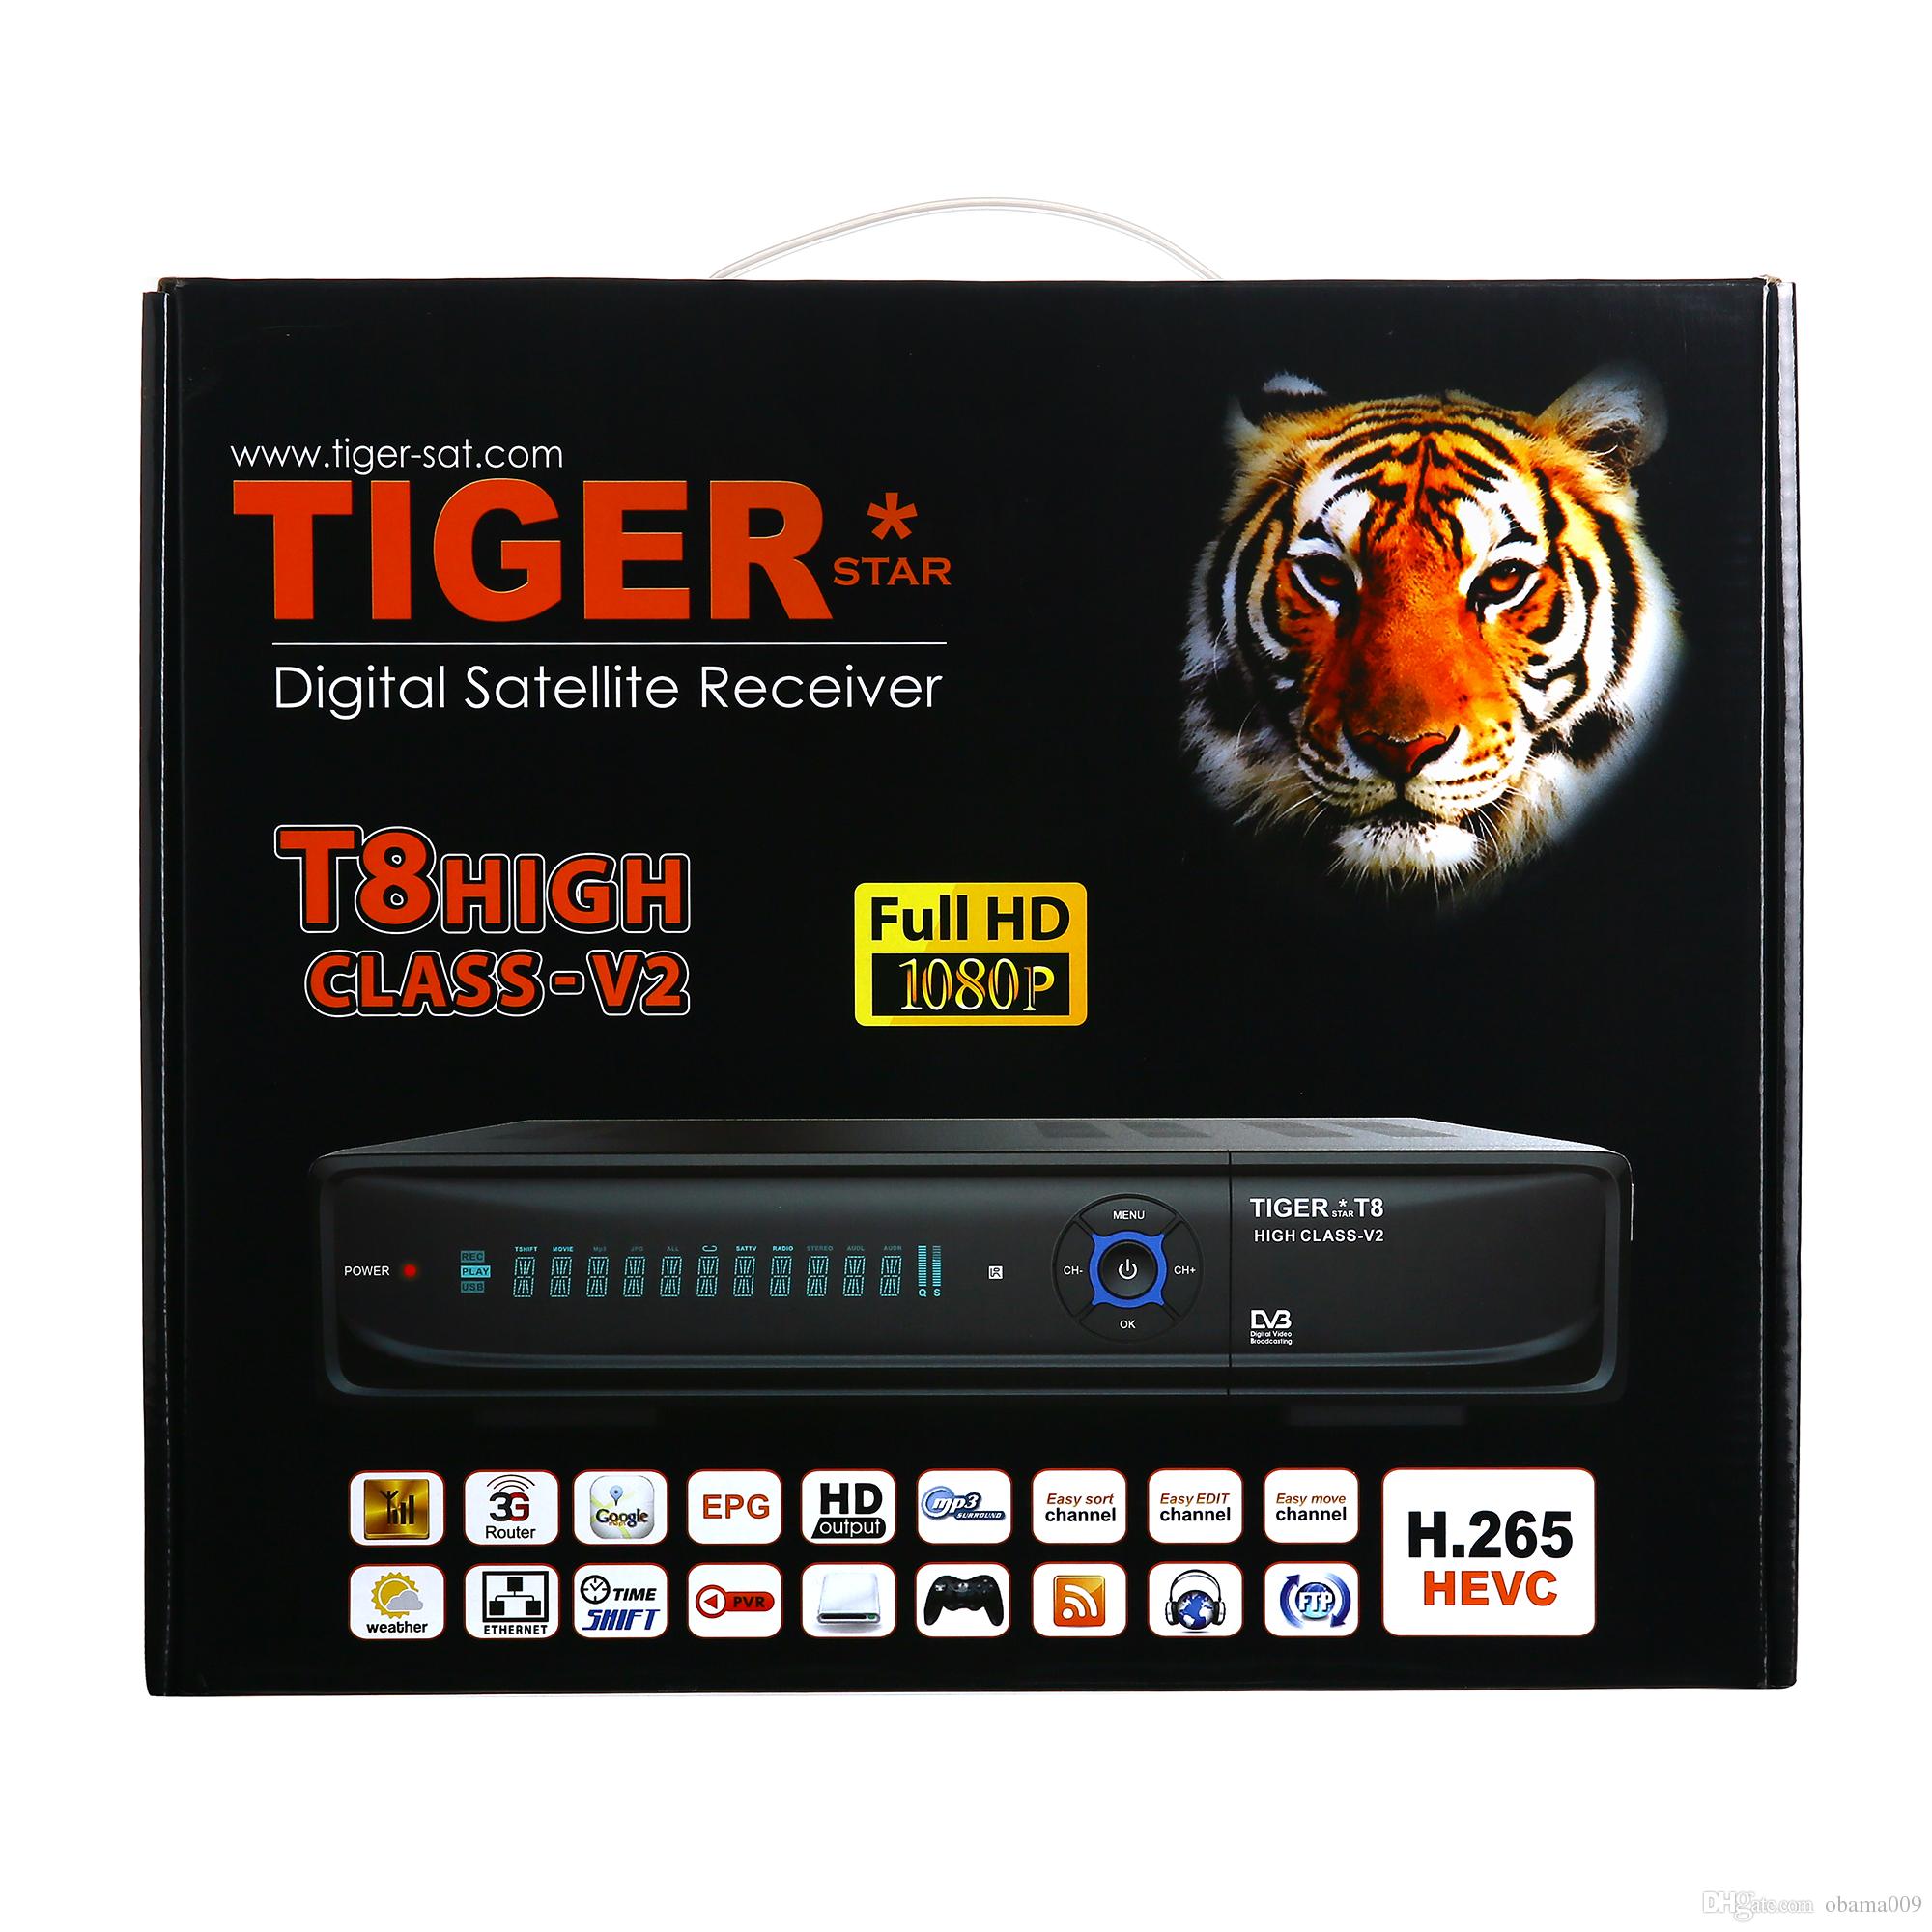 Тайгер характеристика. Ресивер Tiger. Tiger t718. Tiger m1 Plus. Тюнер Tiger g 450.